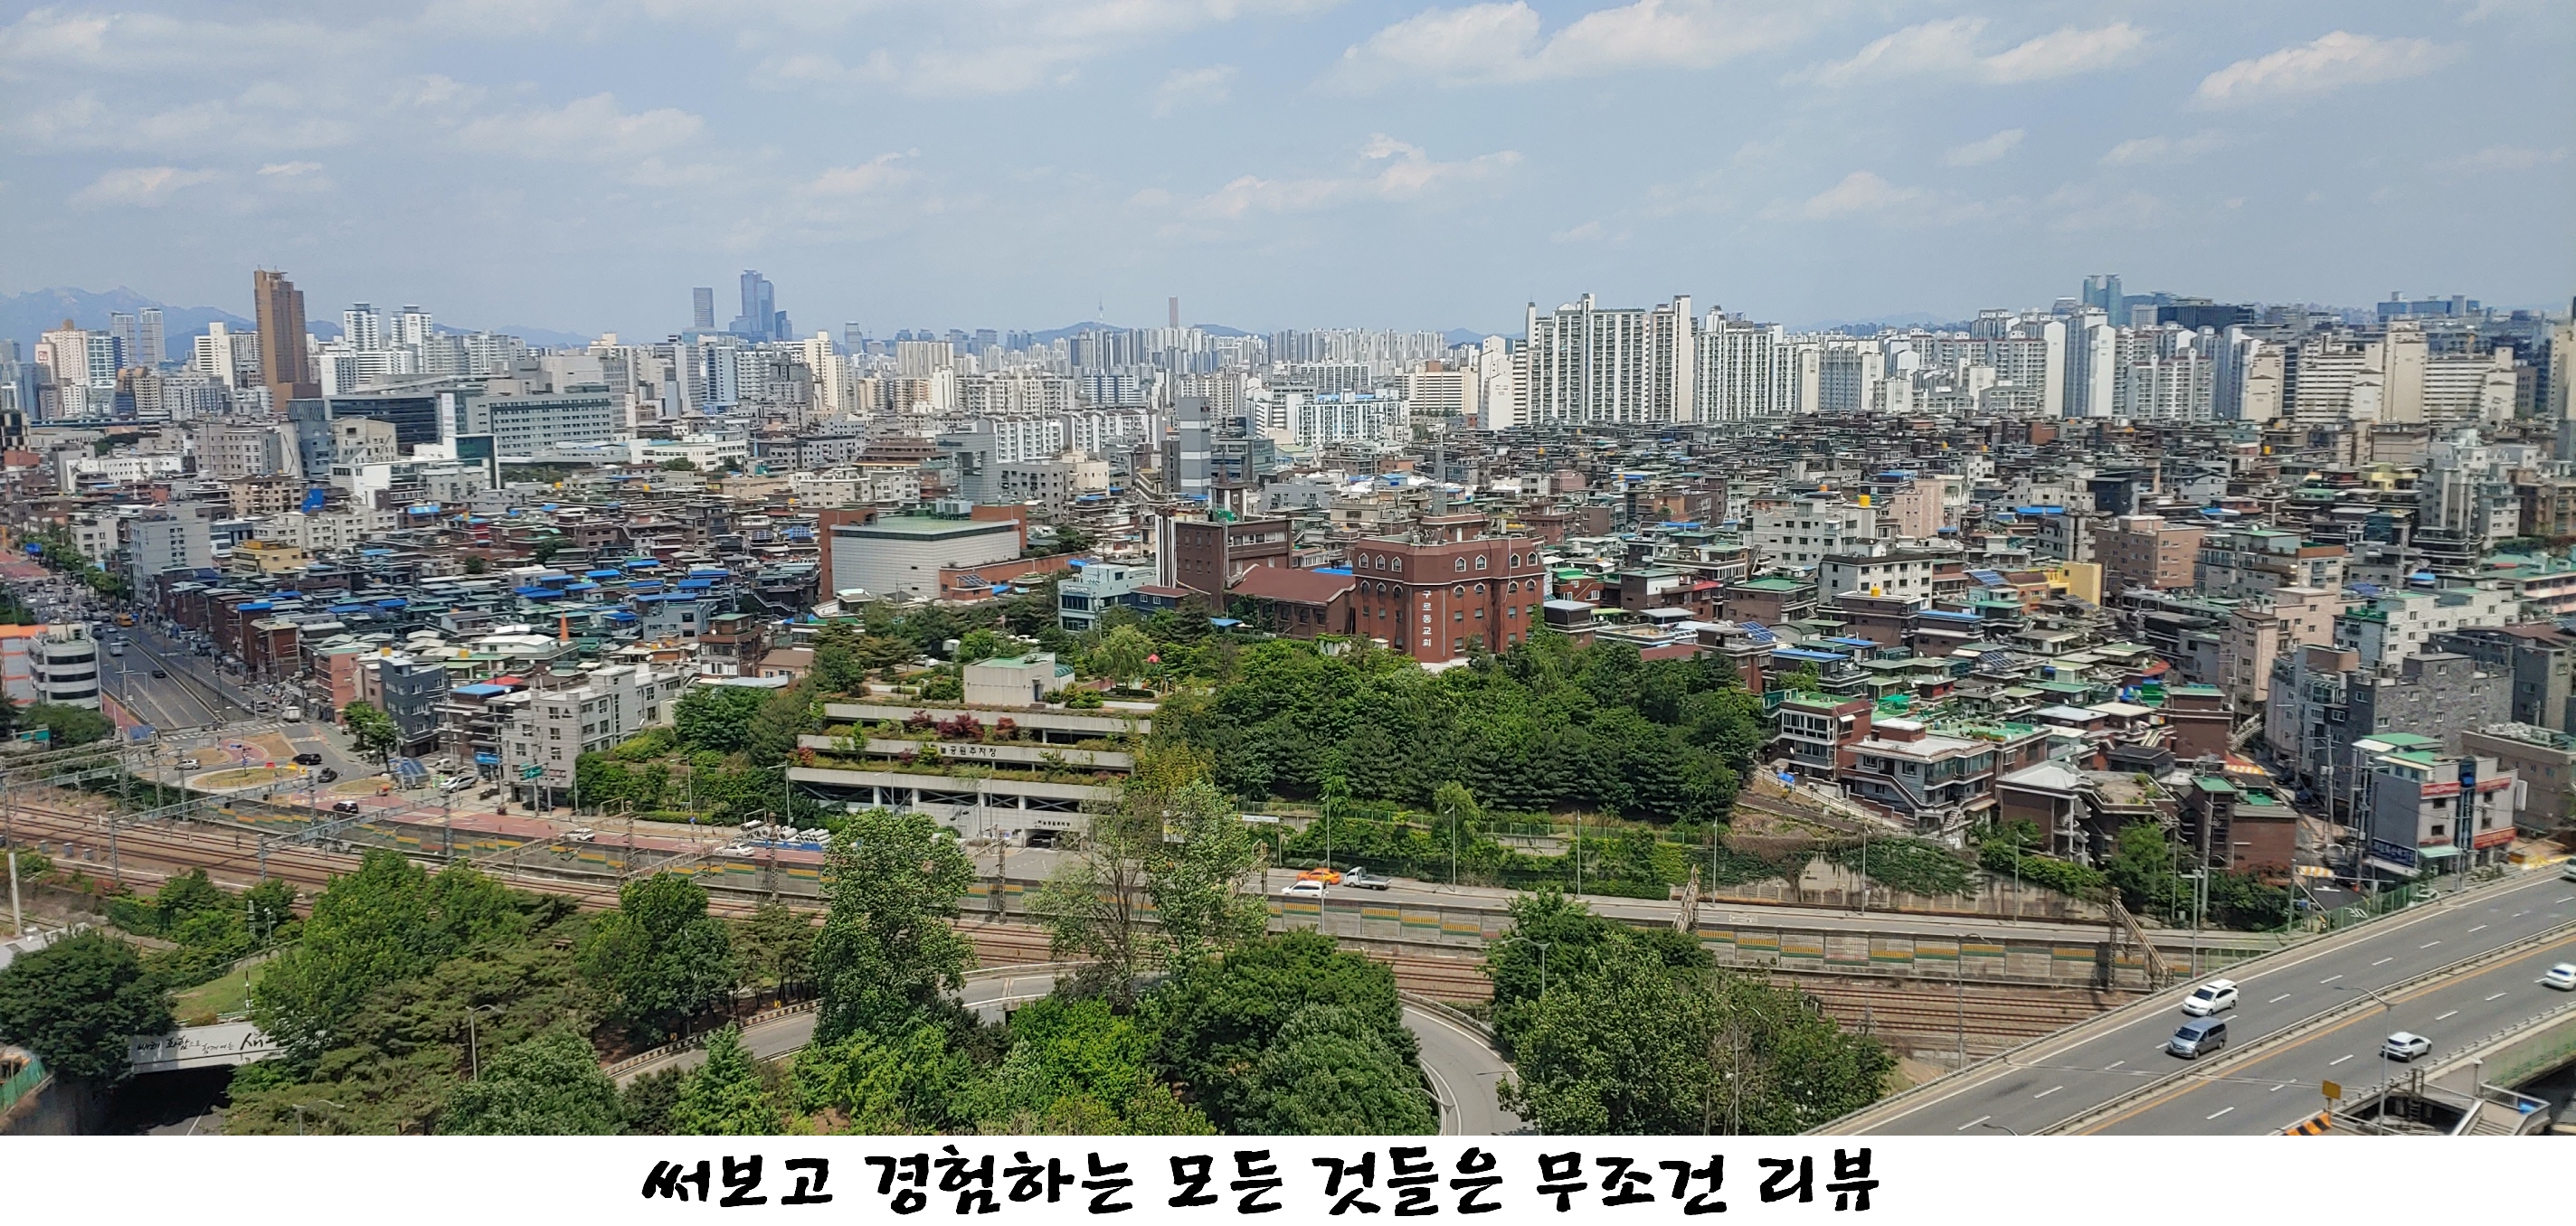 220527&#44; Seoul&#44; 사진&#44; 서울&#44; 풍경&#44; 하늘